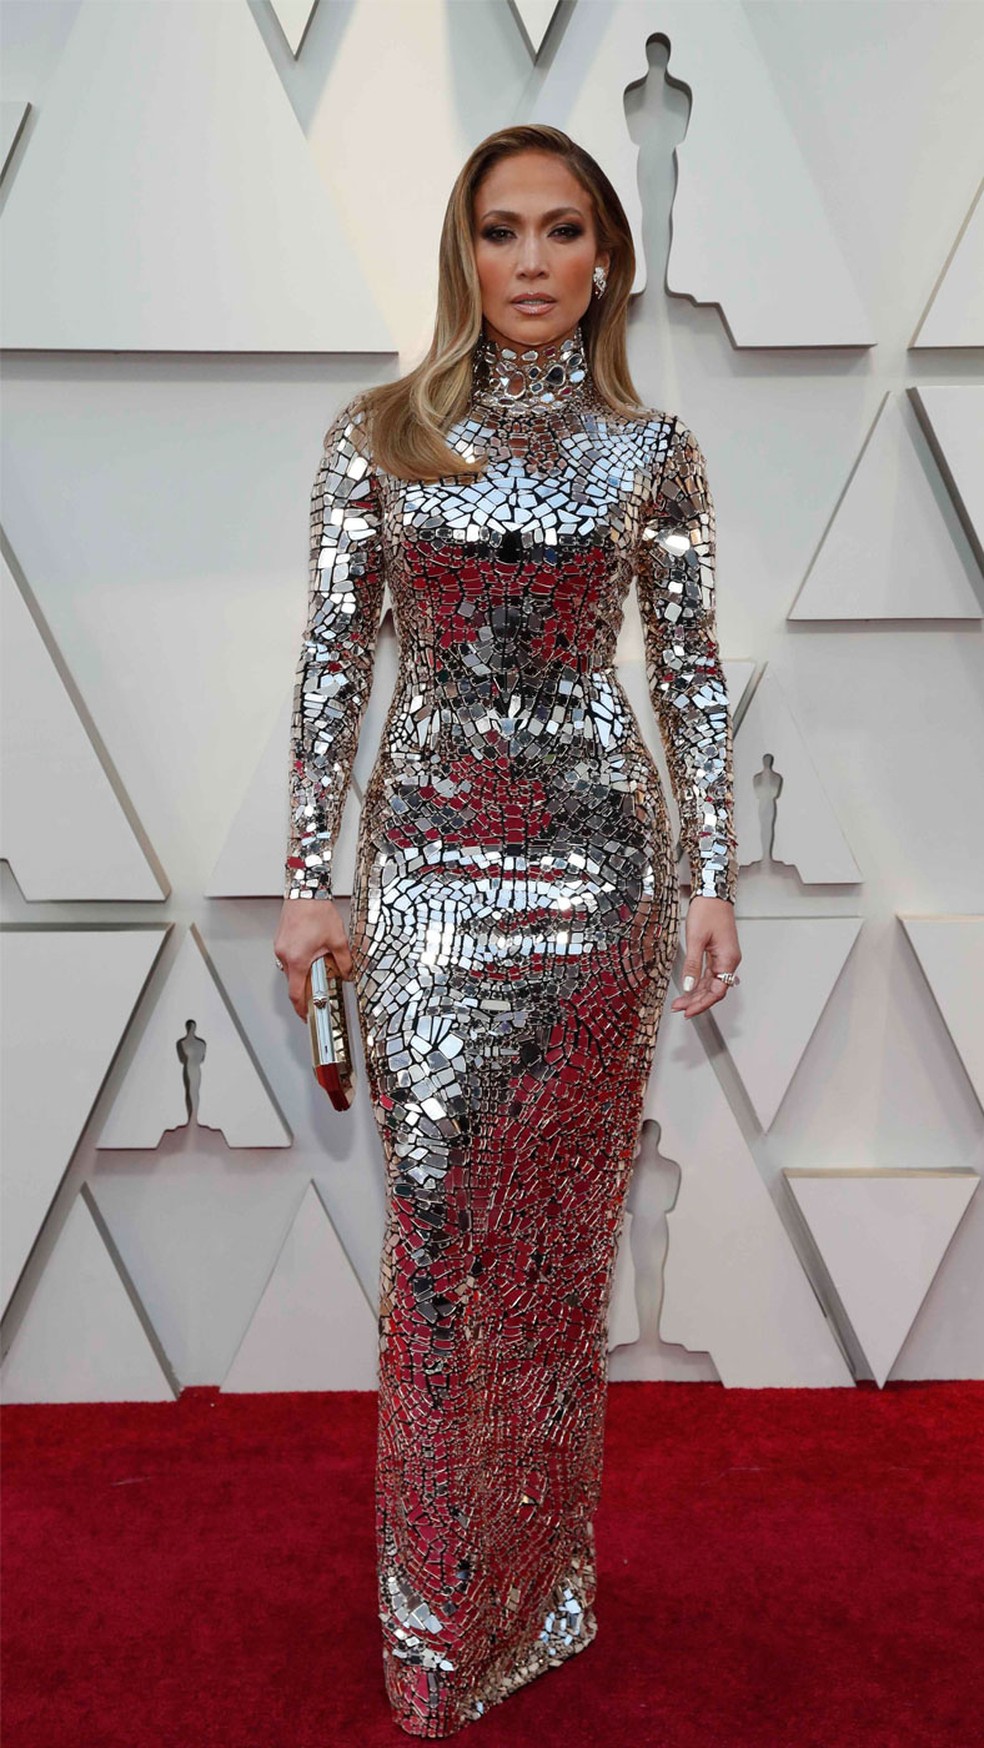 A cantora Jennifer Lopez no tapete vermelho do Oscar 2019 â€” Foto: Mario Anzuoni/Reuters